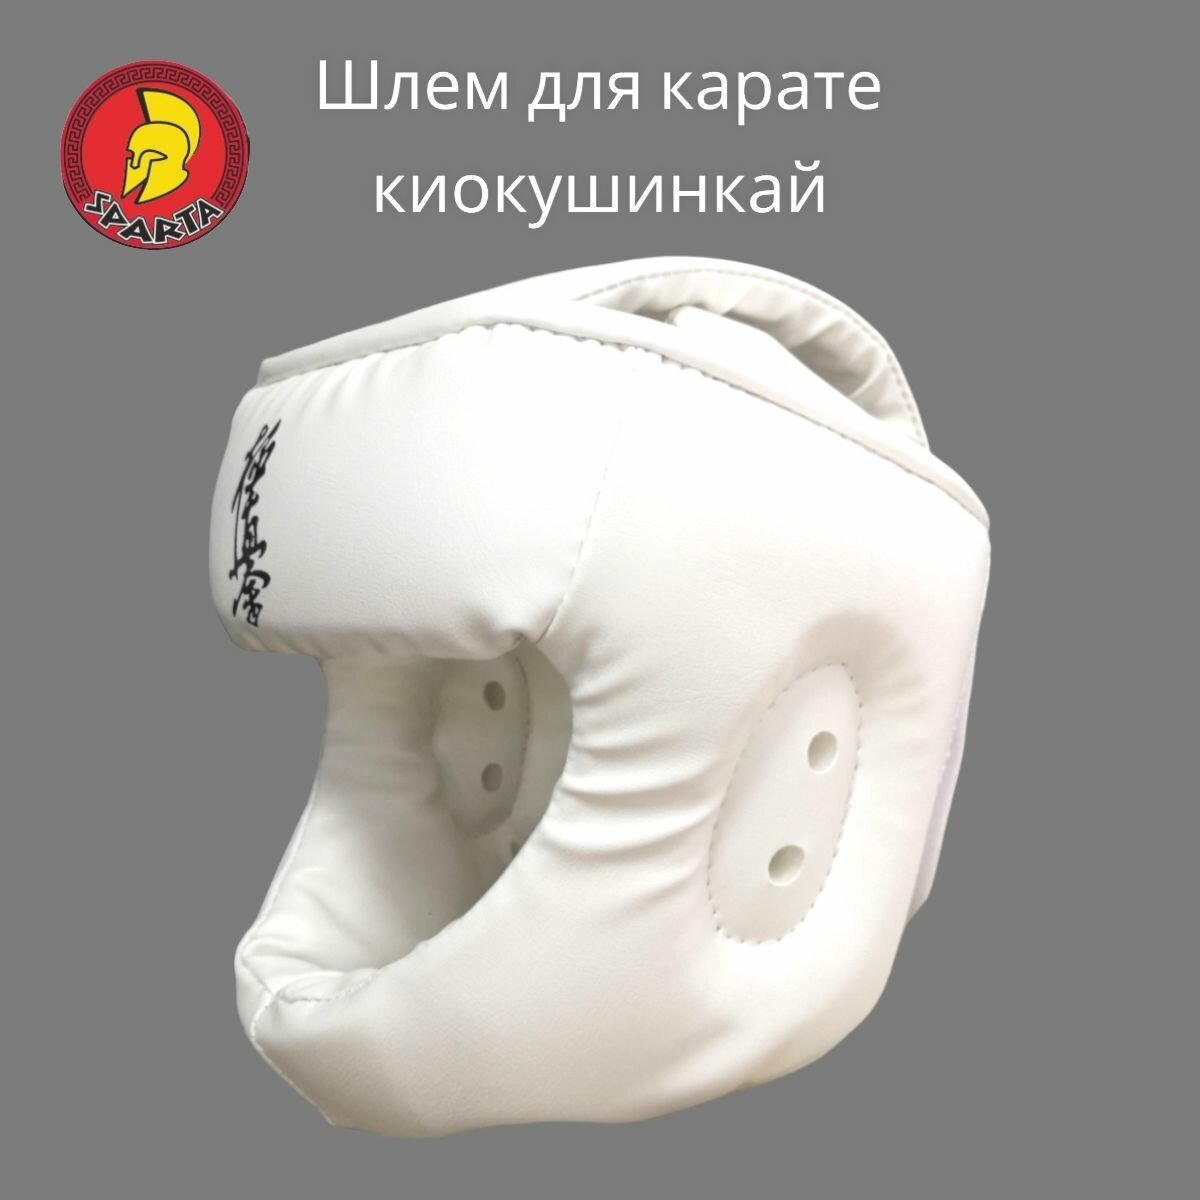 Шлем для каратэ Киокушинкай "Боец" р. L